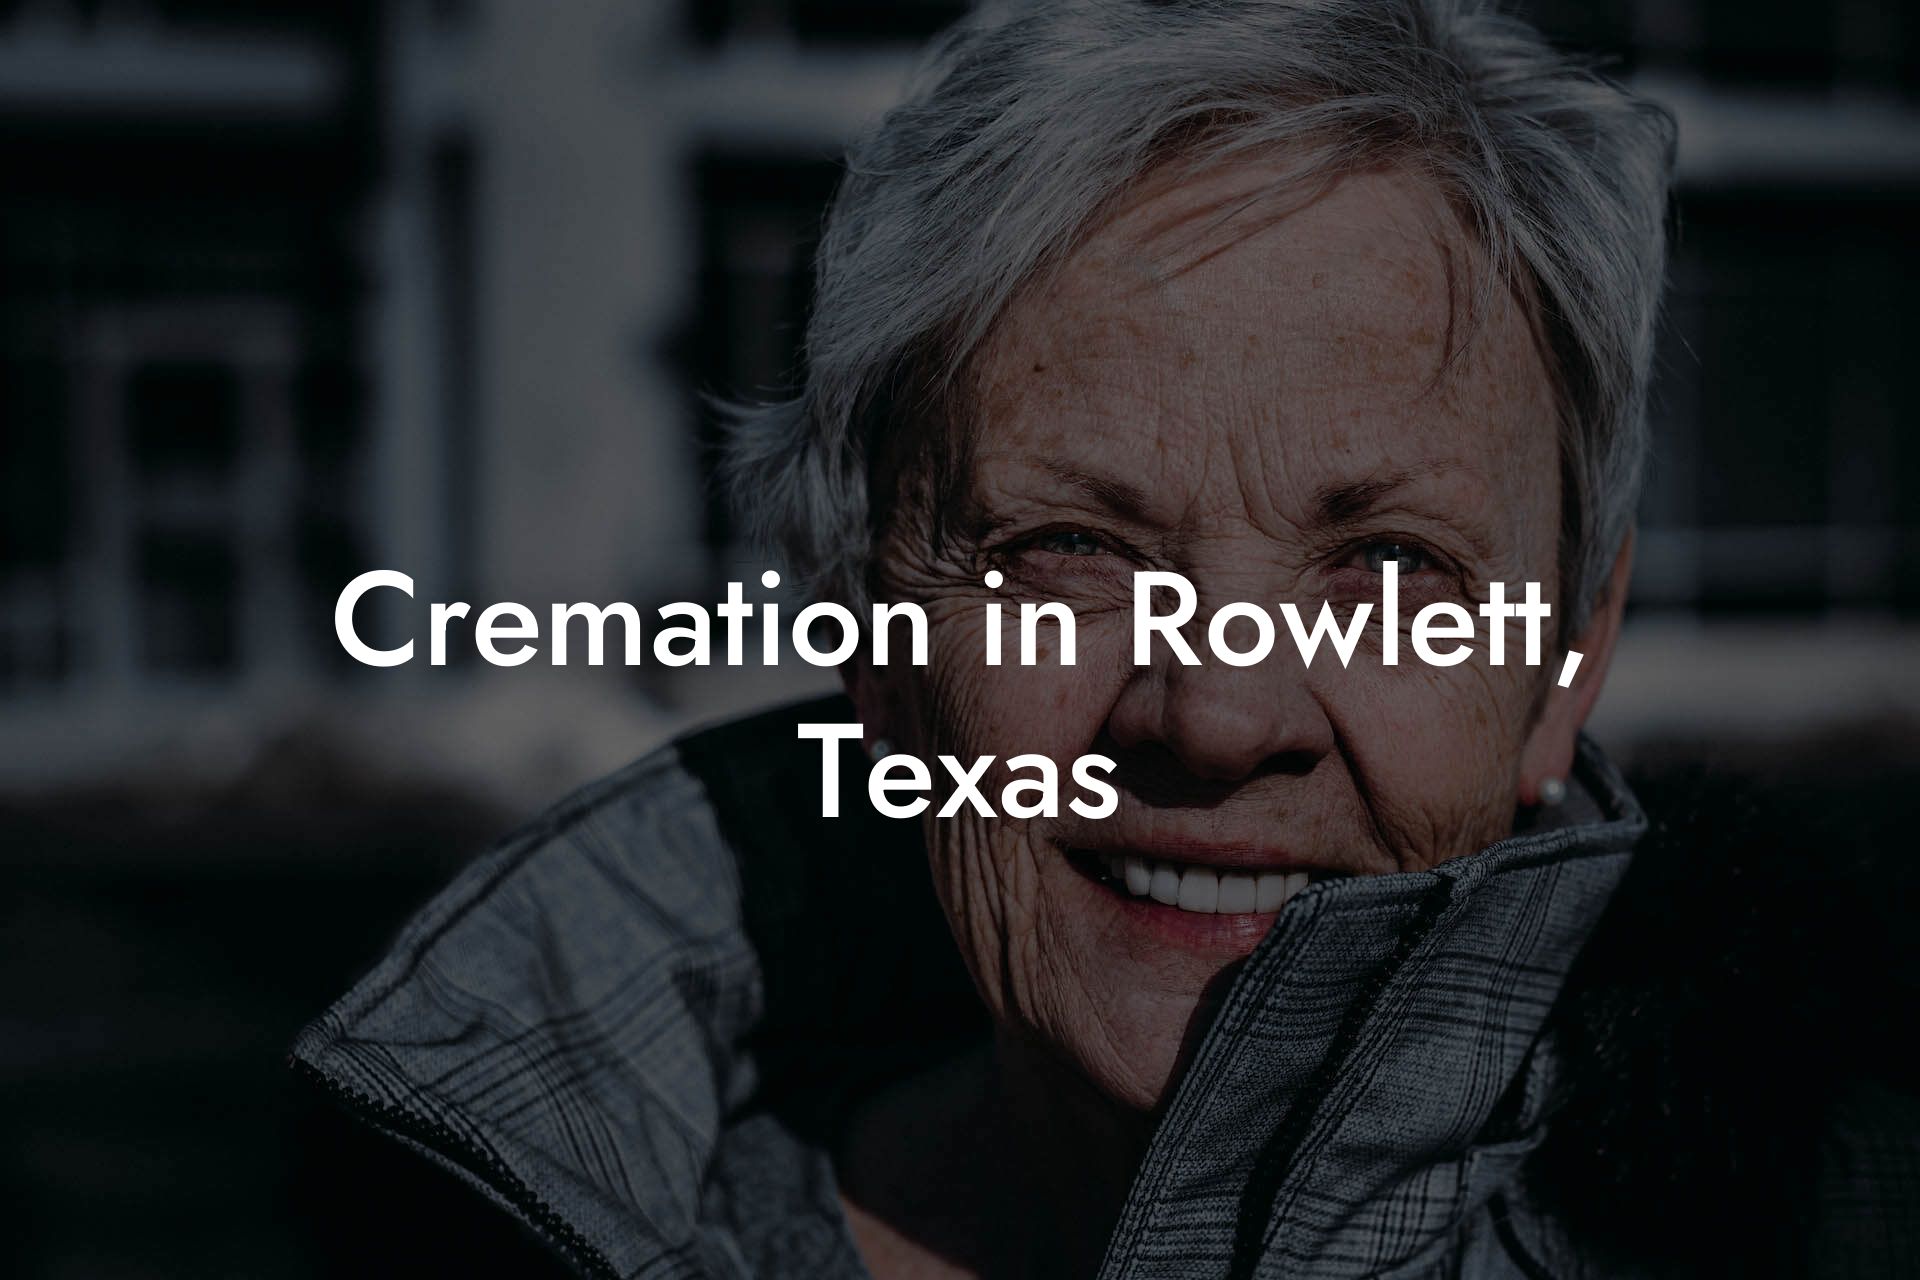 Cremation in Rowlett, Texas